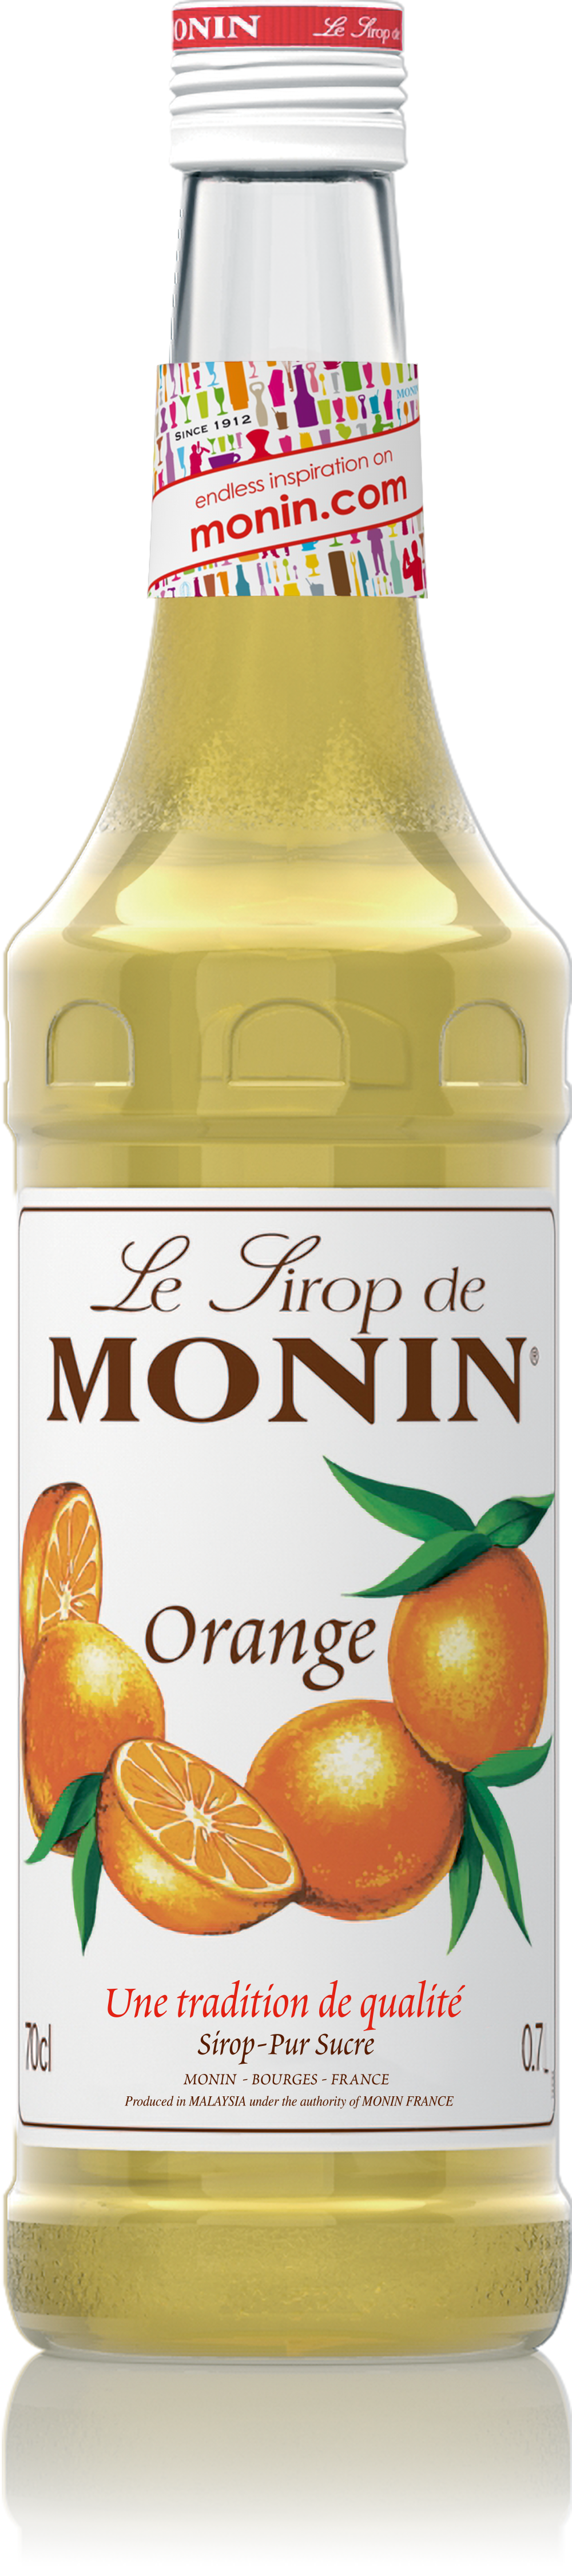 Le Sirop de MONIN Orange